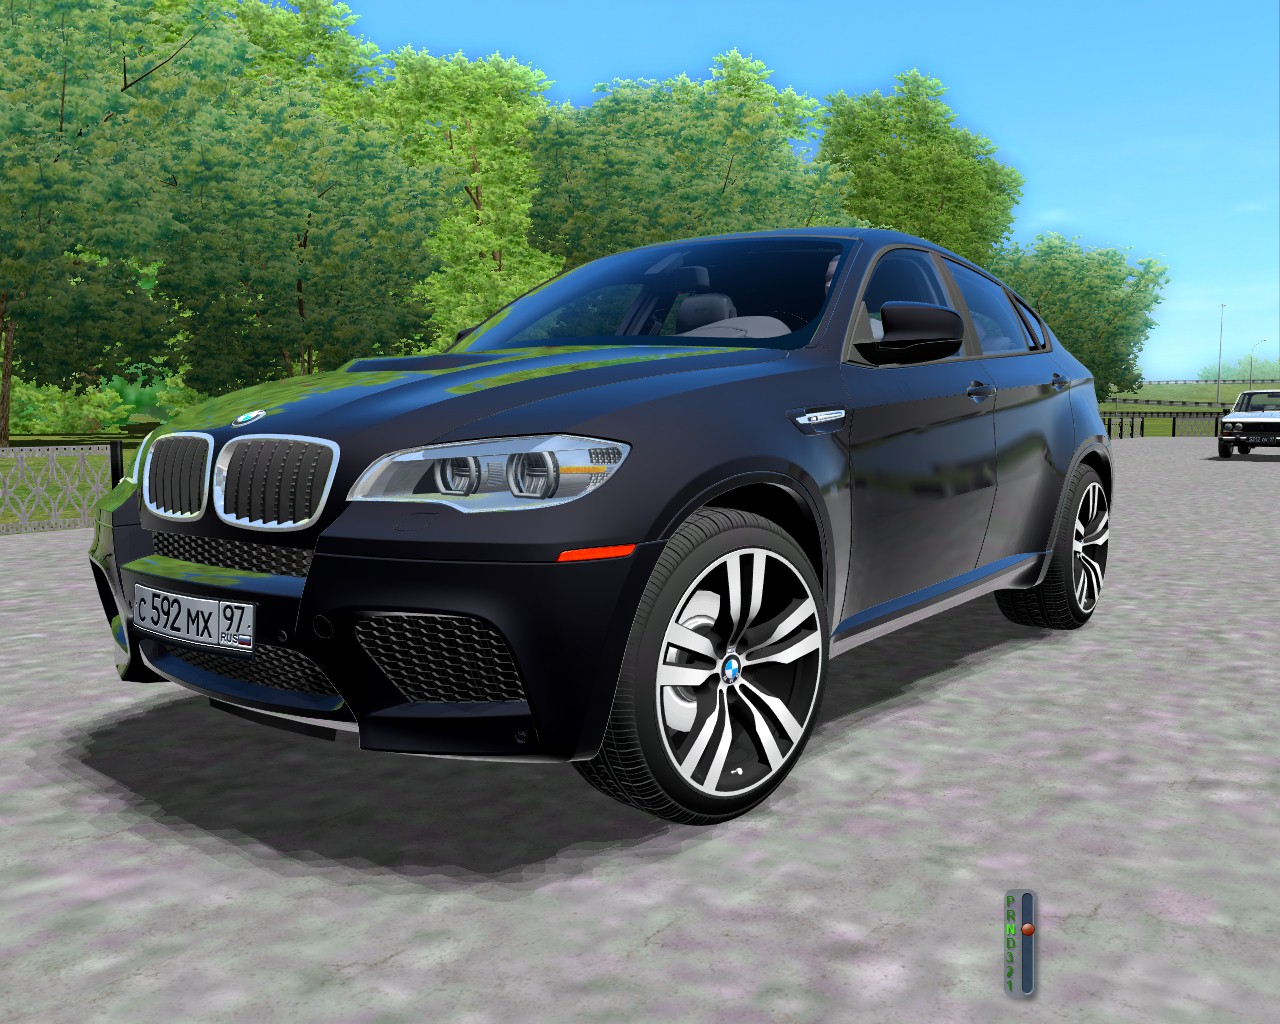 X6 x3 2. City car Driving BMW x6. BMW x5 City car Driving 1.5.9.2. BMW x7 40i Сити кар драйвинг. БМВ х5 Сити кар драйвинг.